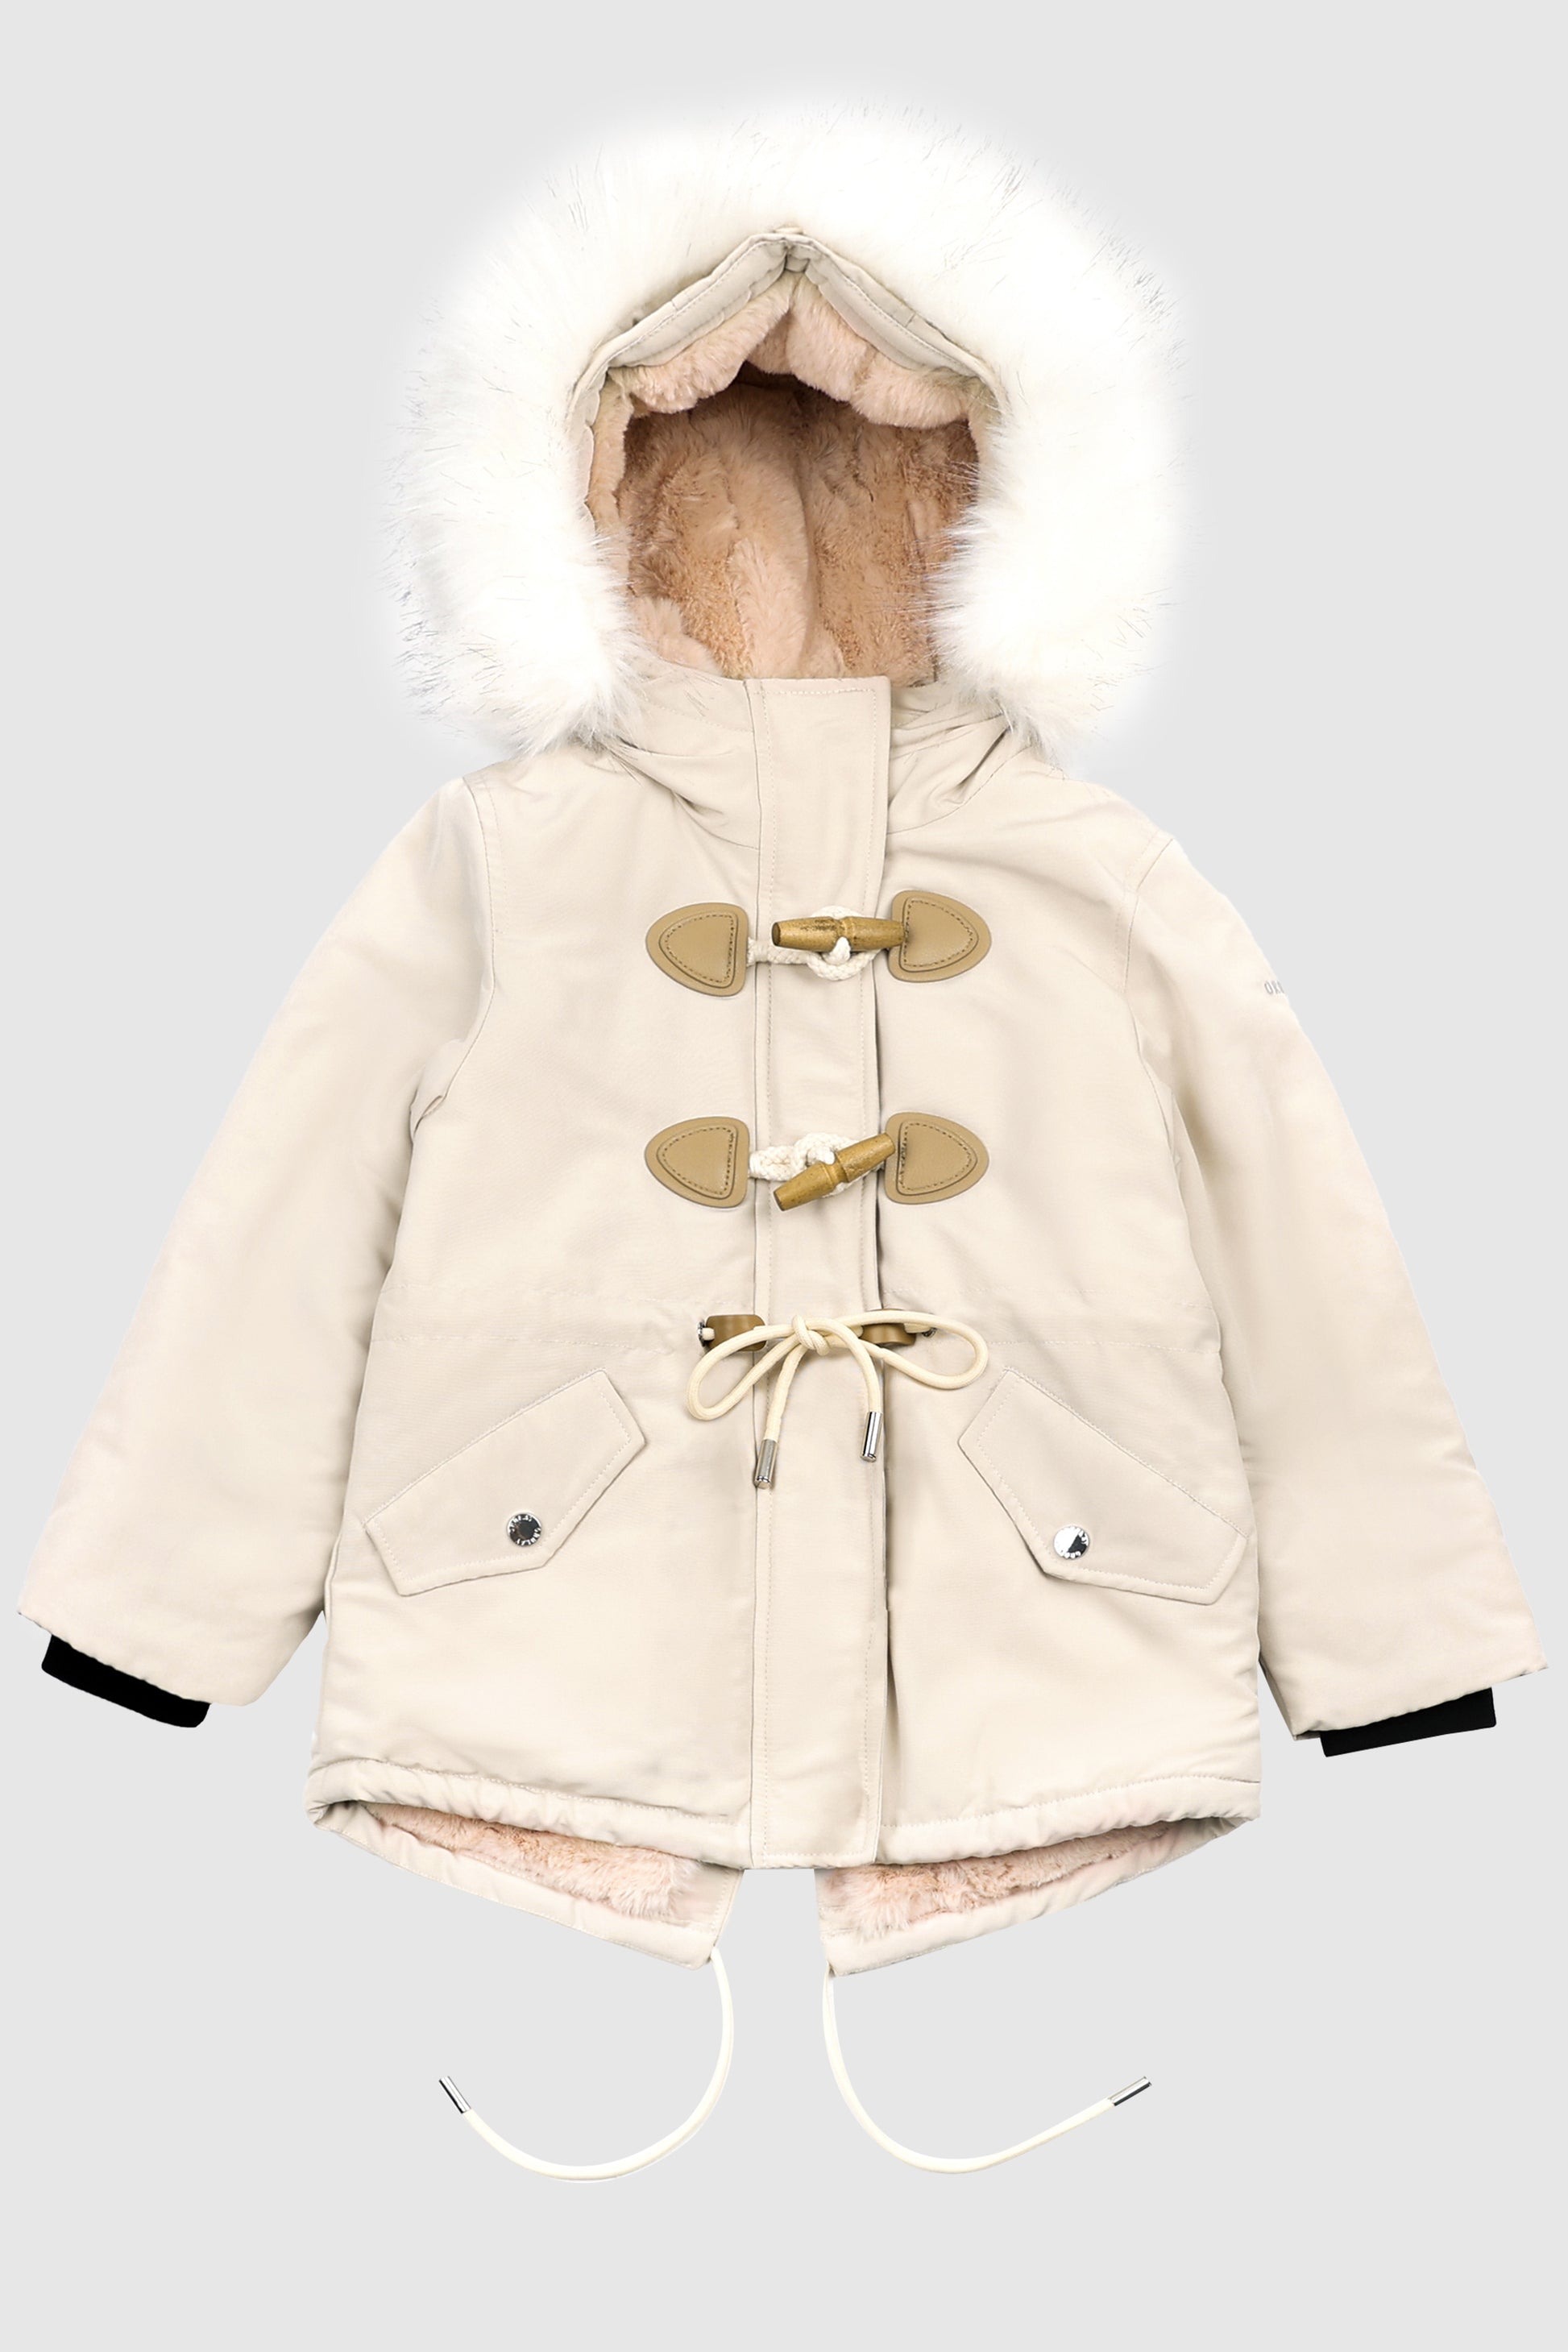 Orolay Kid's Fleece Lined Winter Coat with Hood